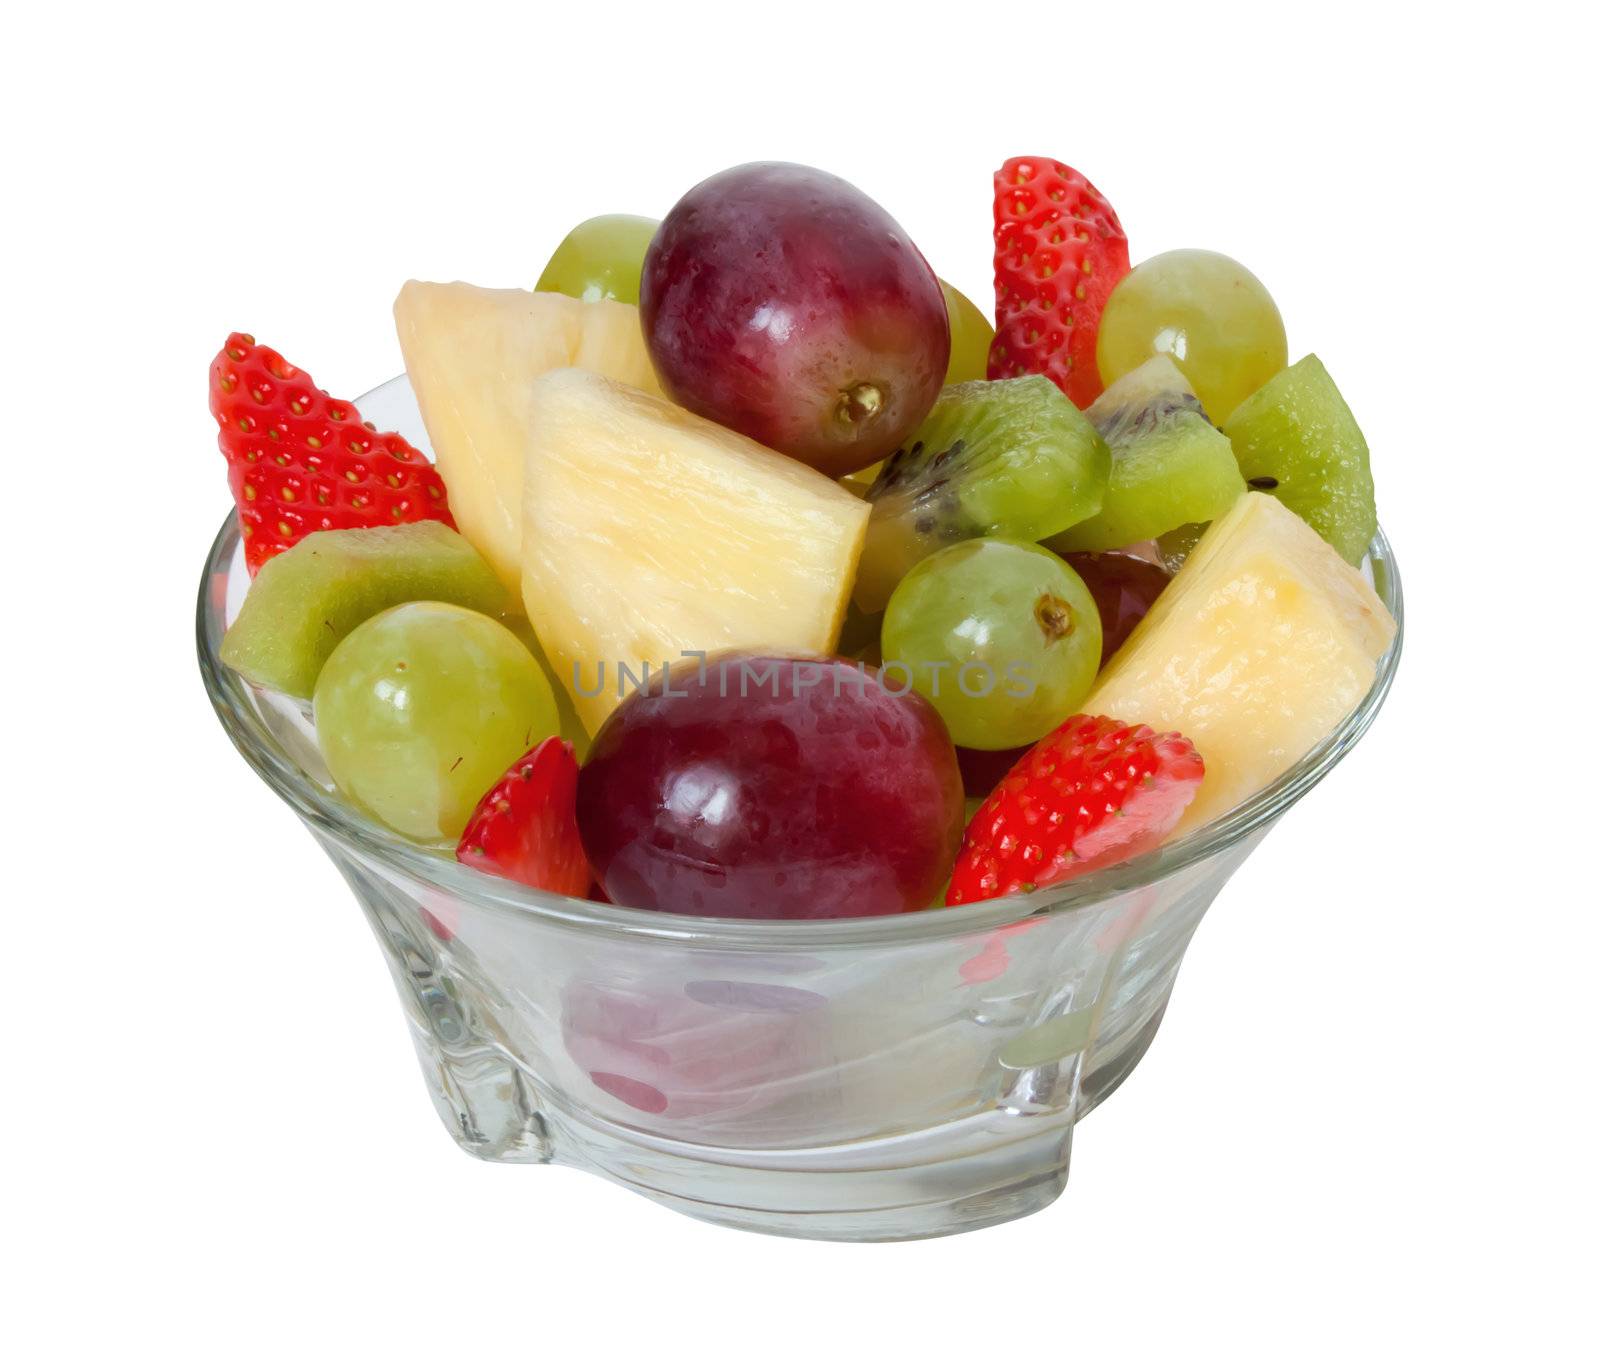 fruit salad wirg vitamins good for healh